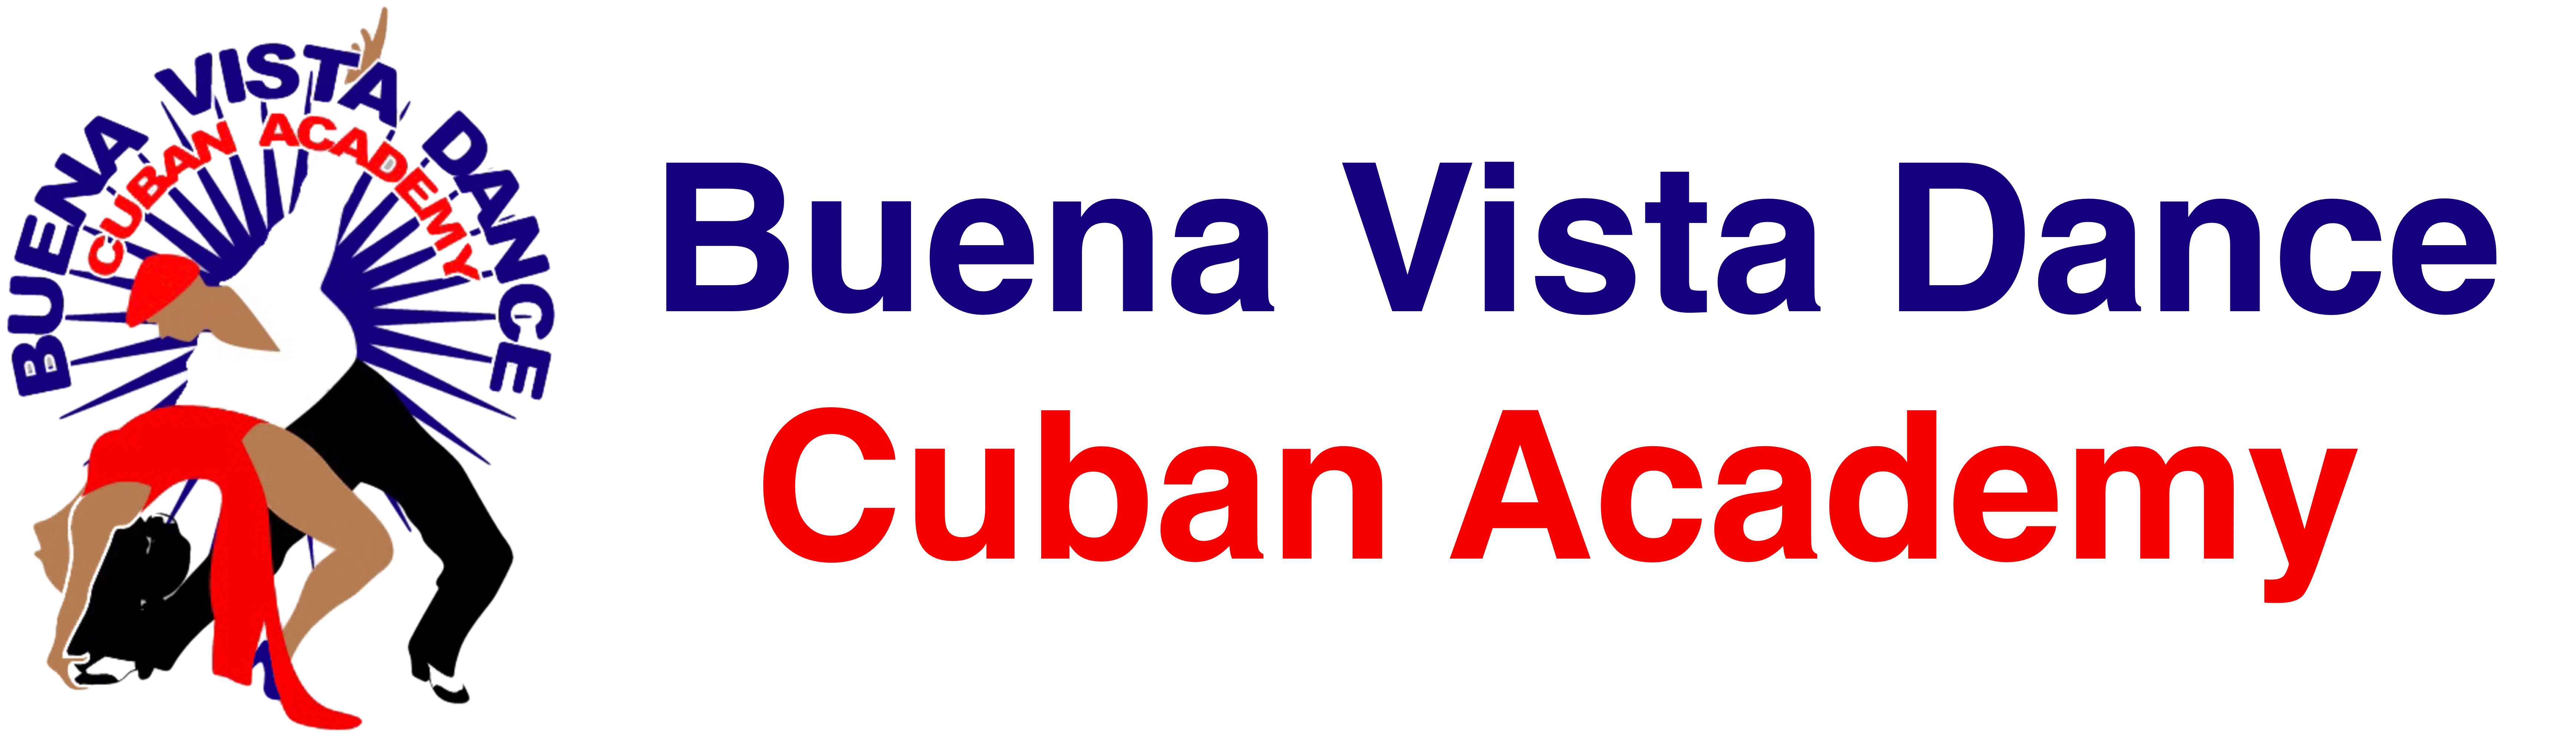 Buena Vista Dance Cuban Academy